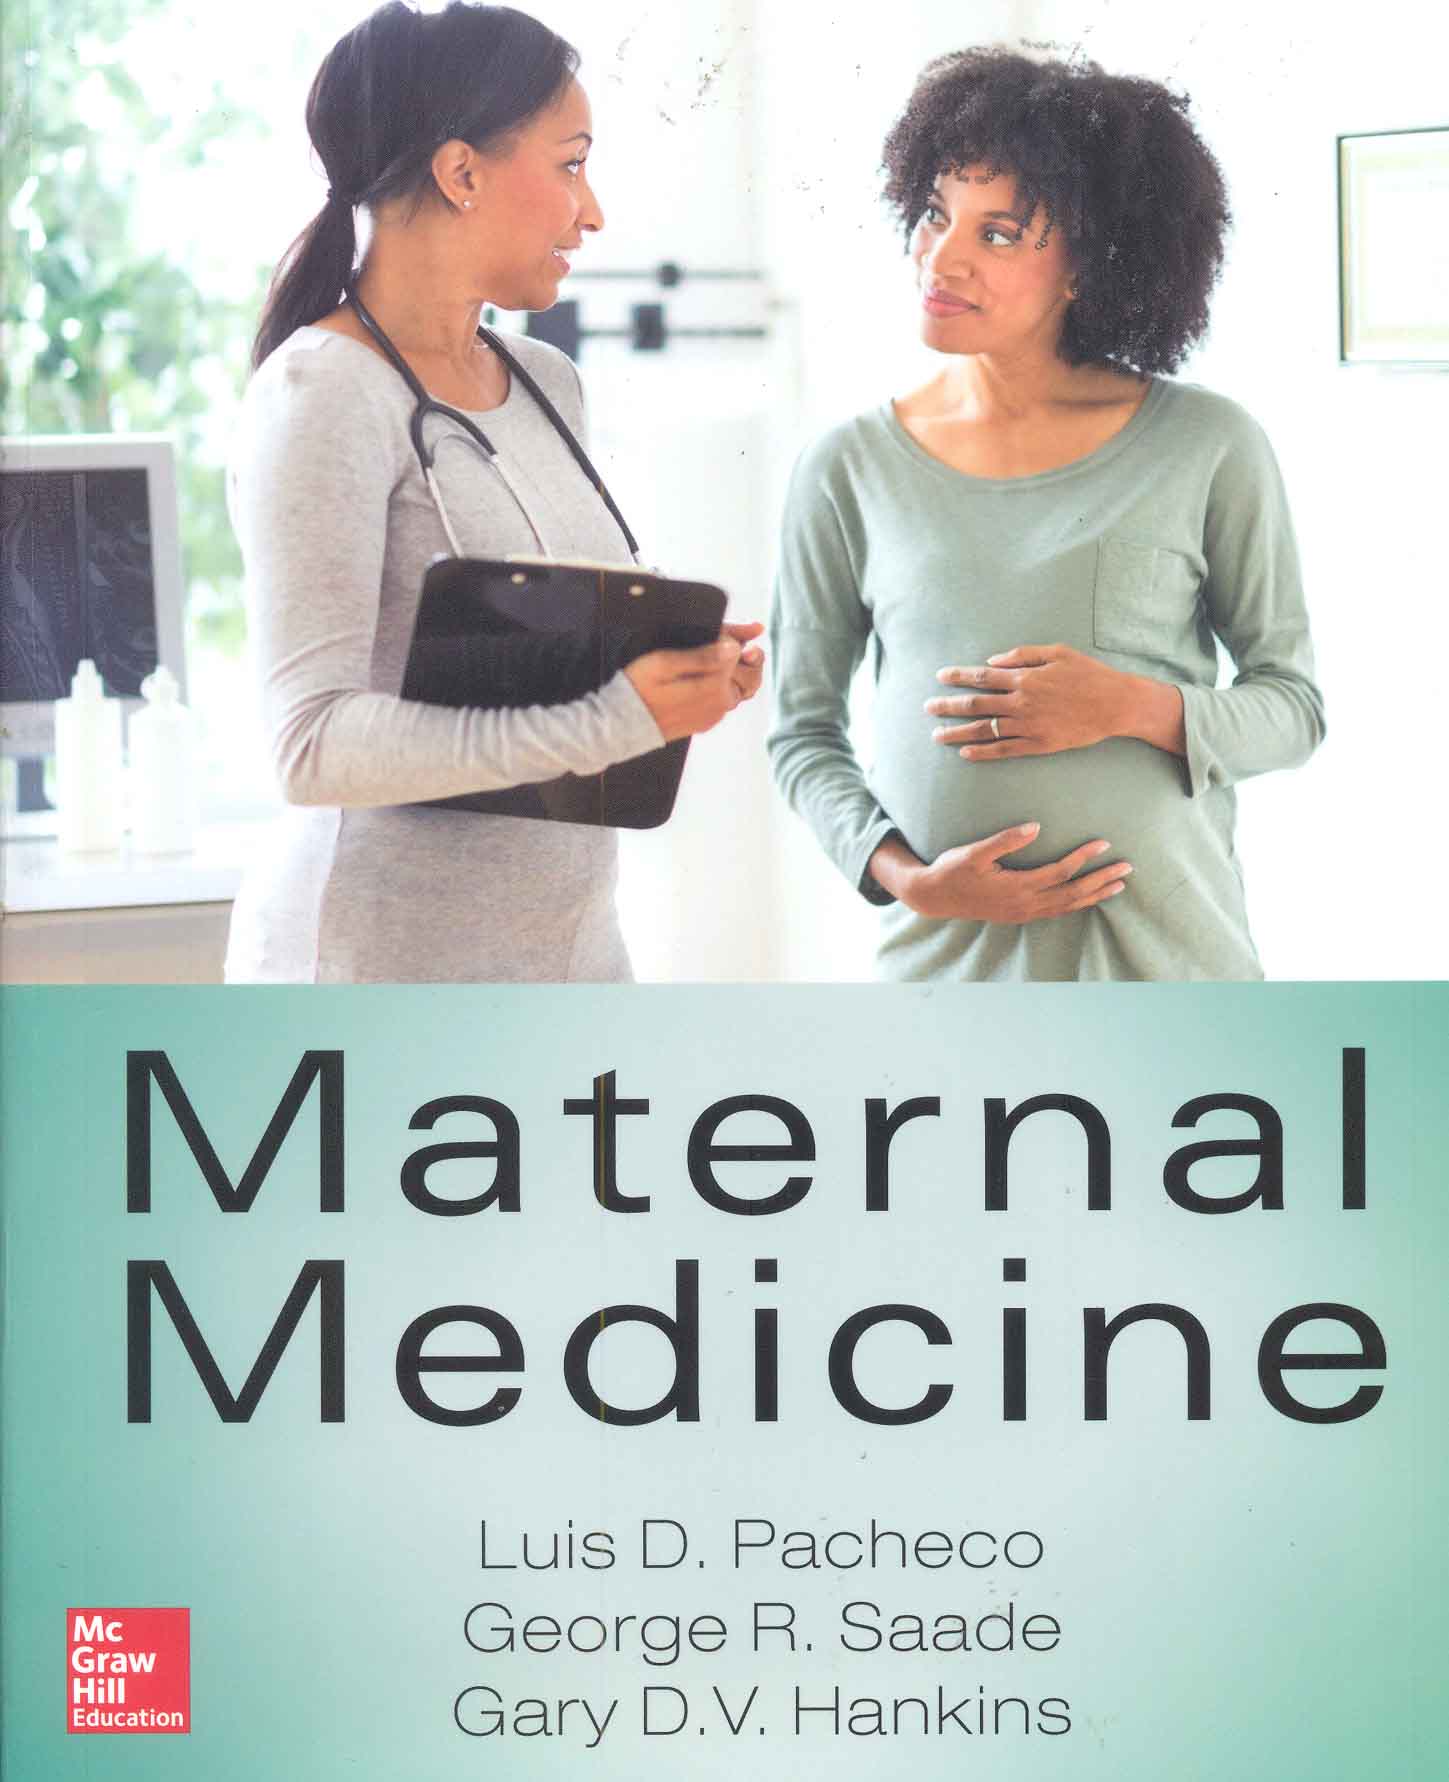 Maternal medicine